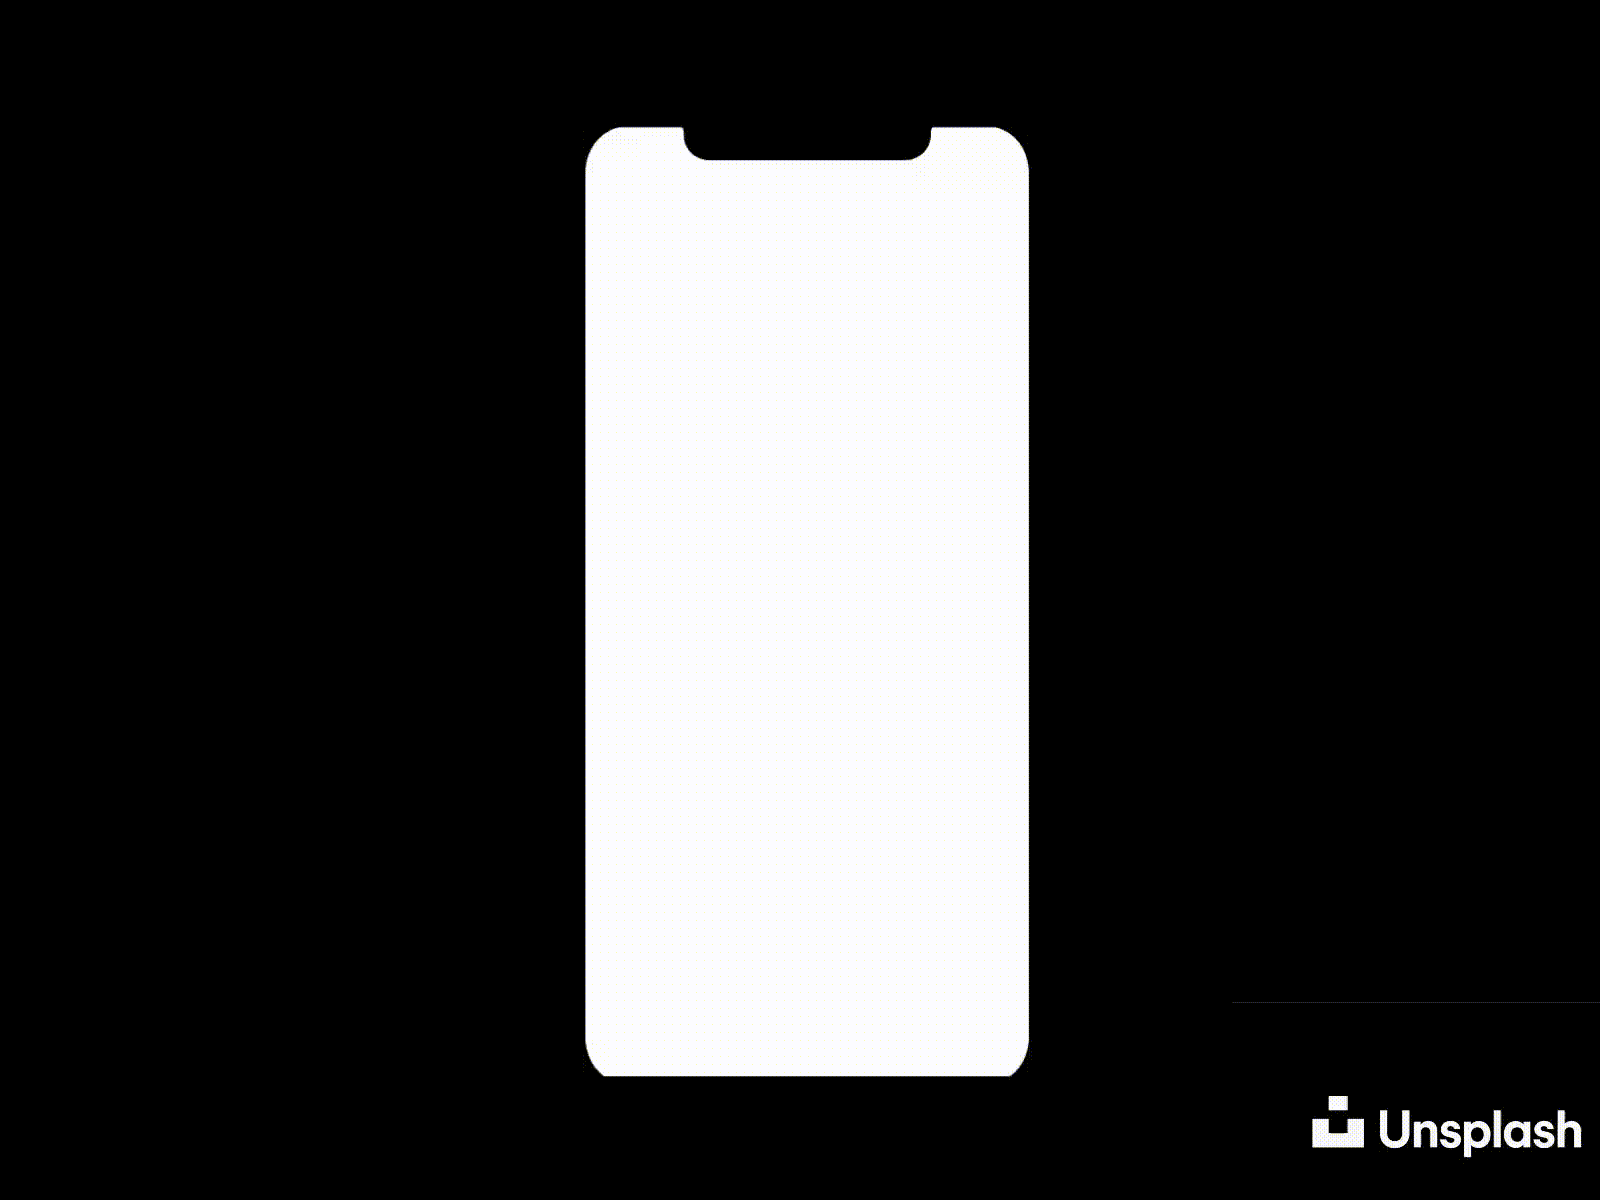 Unsplash App Prototype